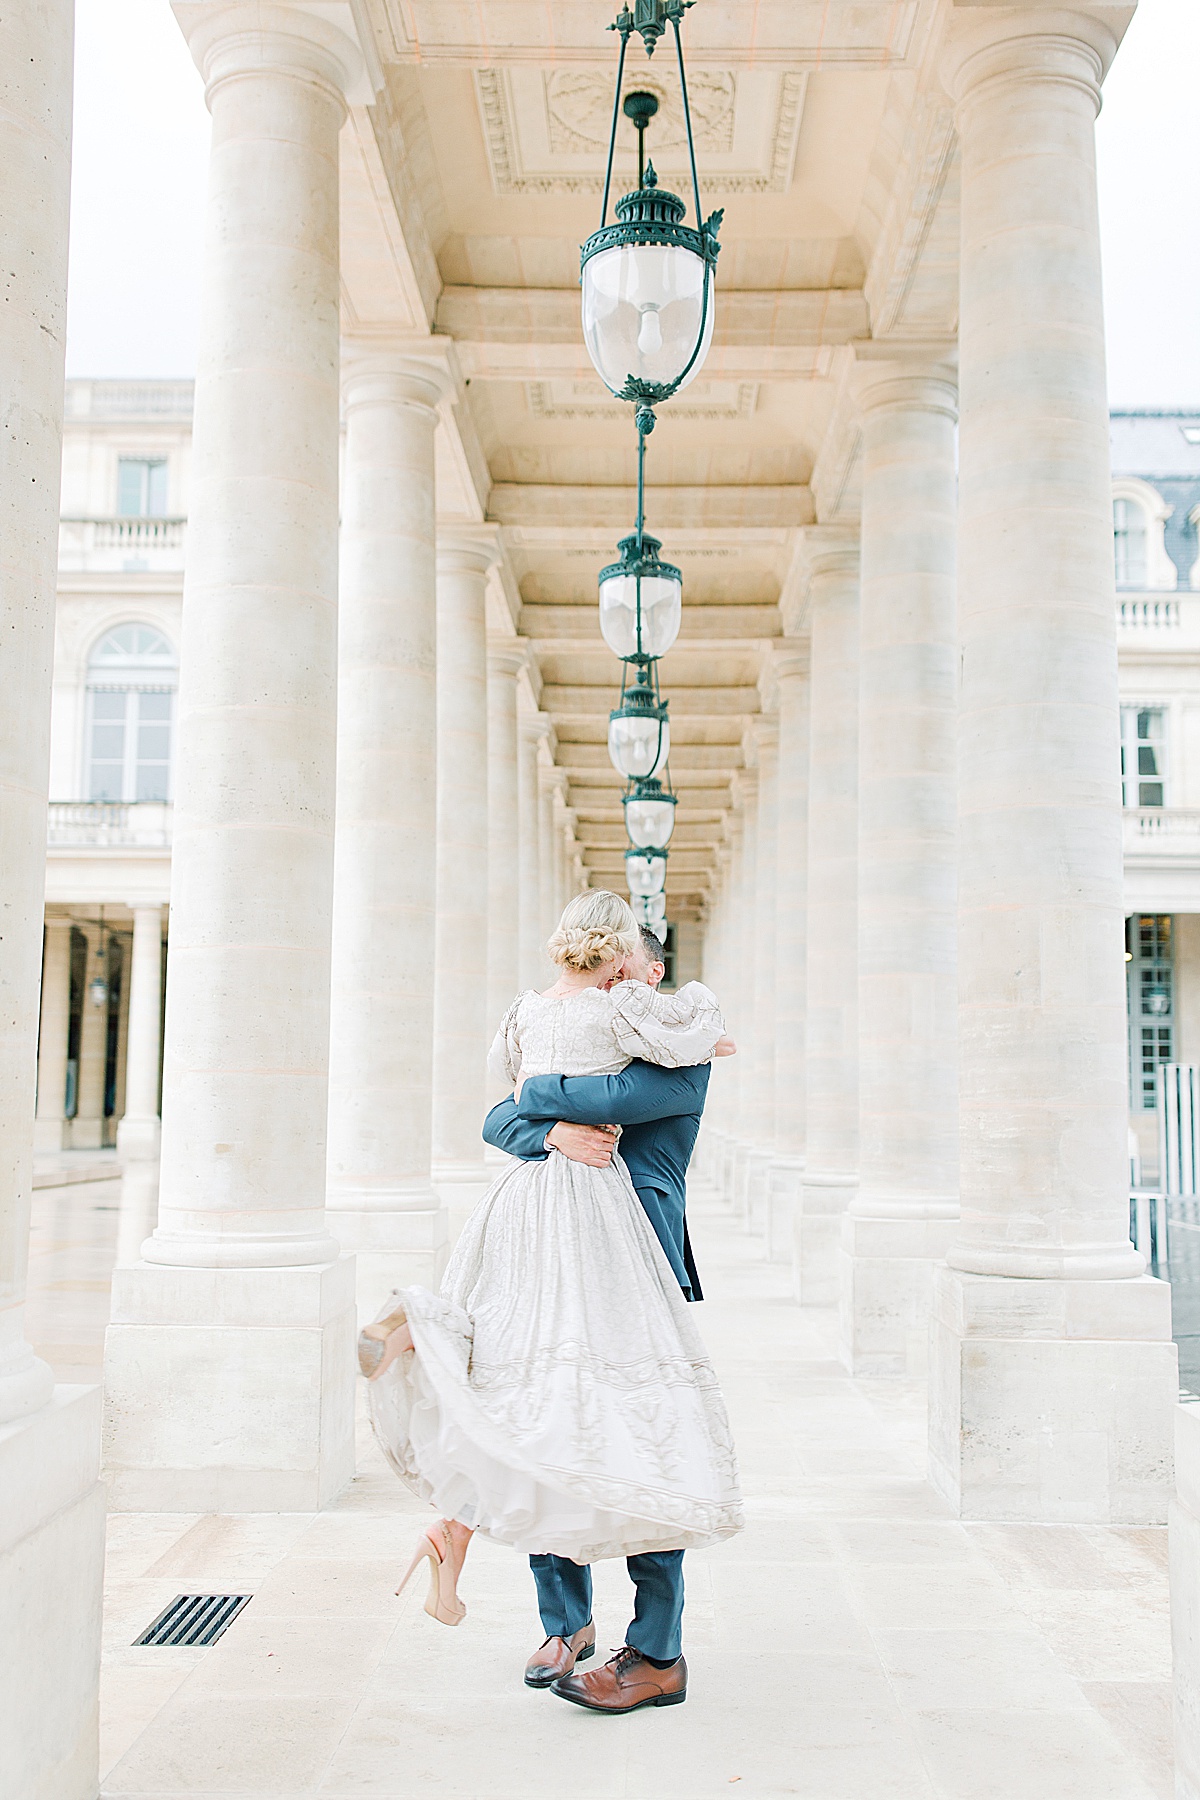 Palais Royal Engagement Couple Spinning in Between pillars Photo